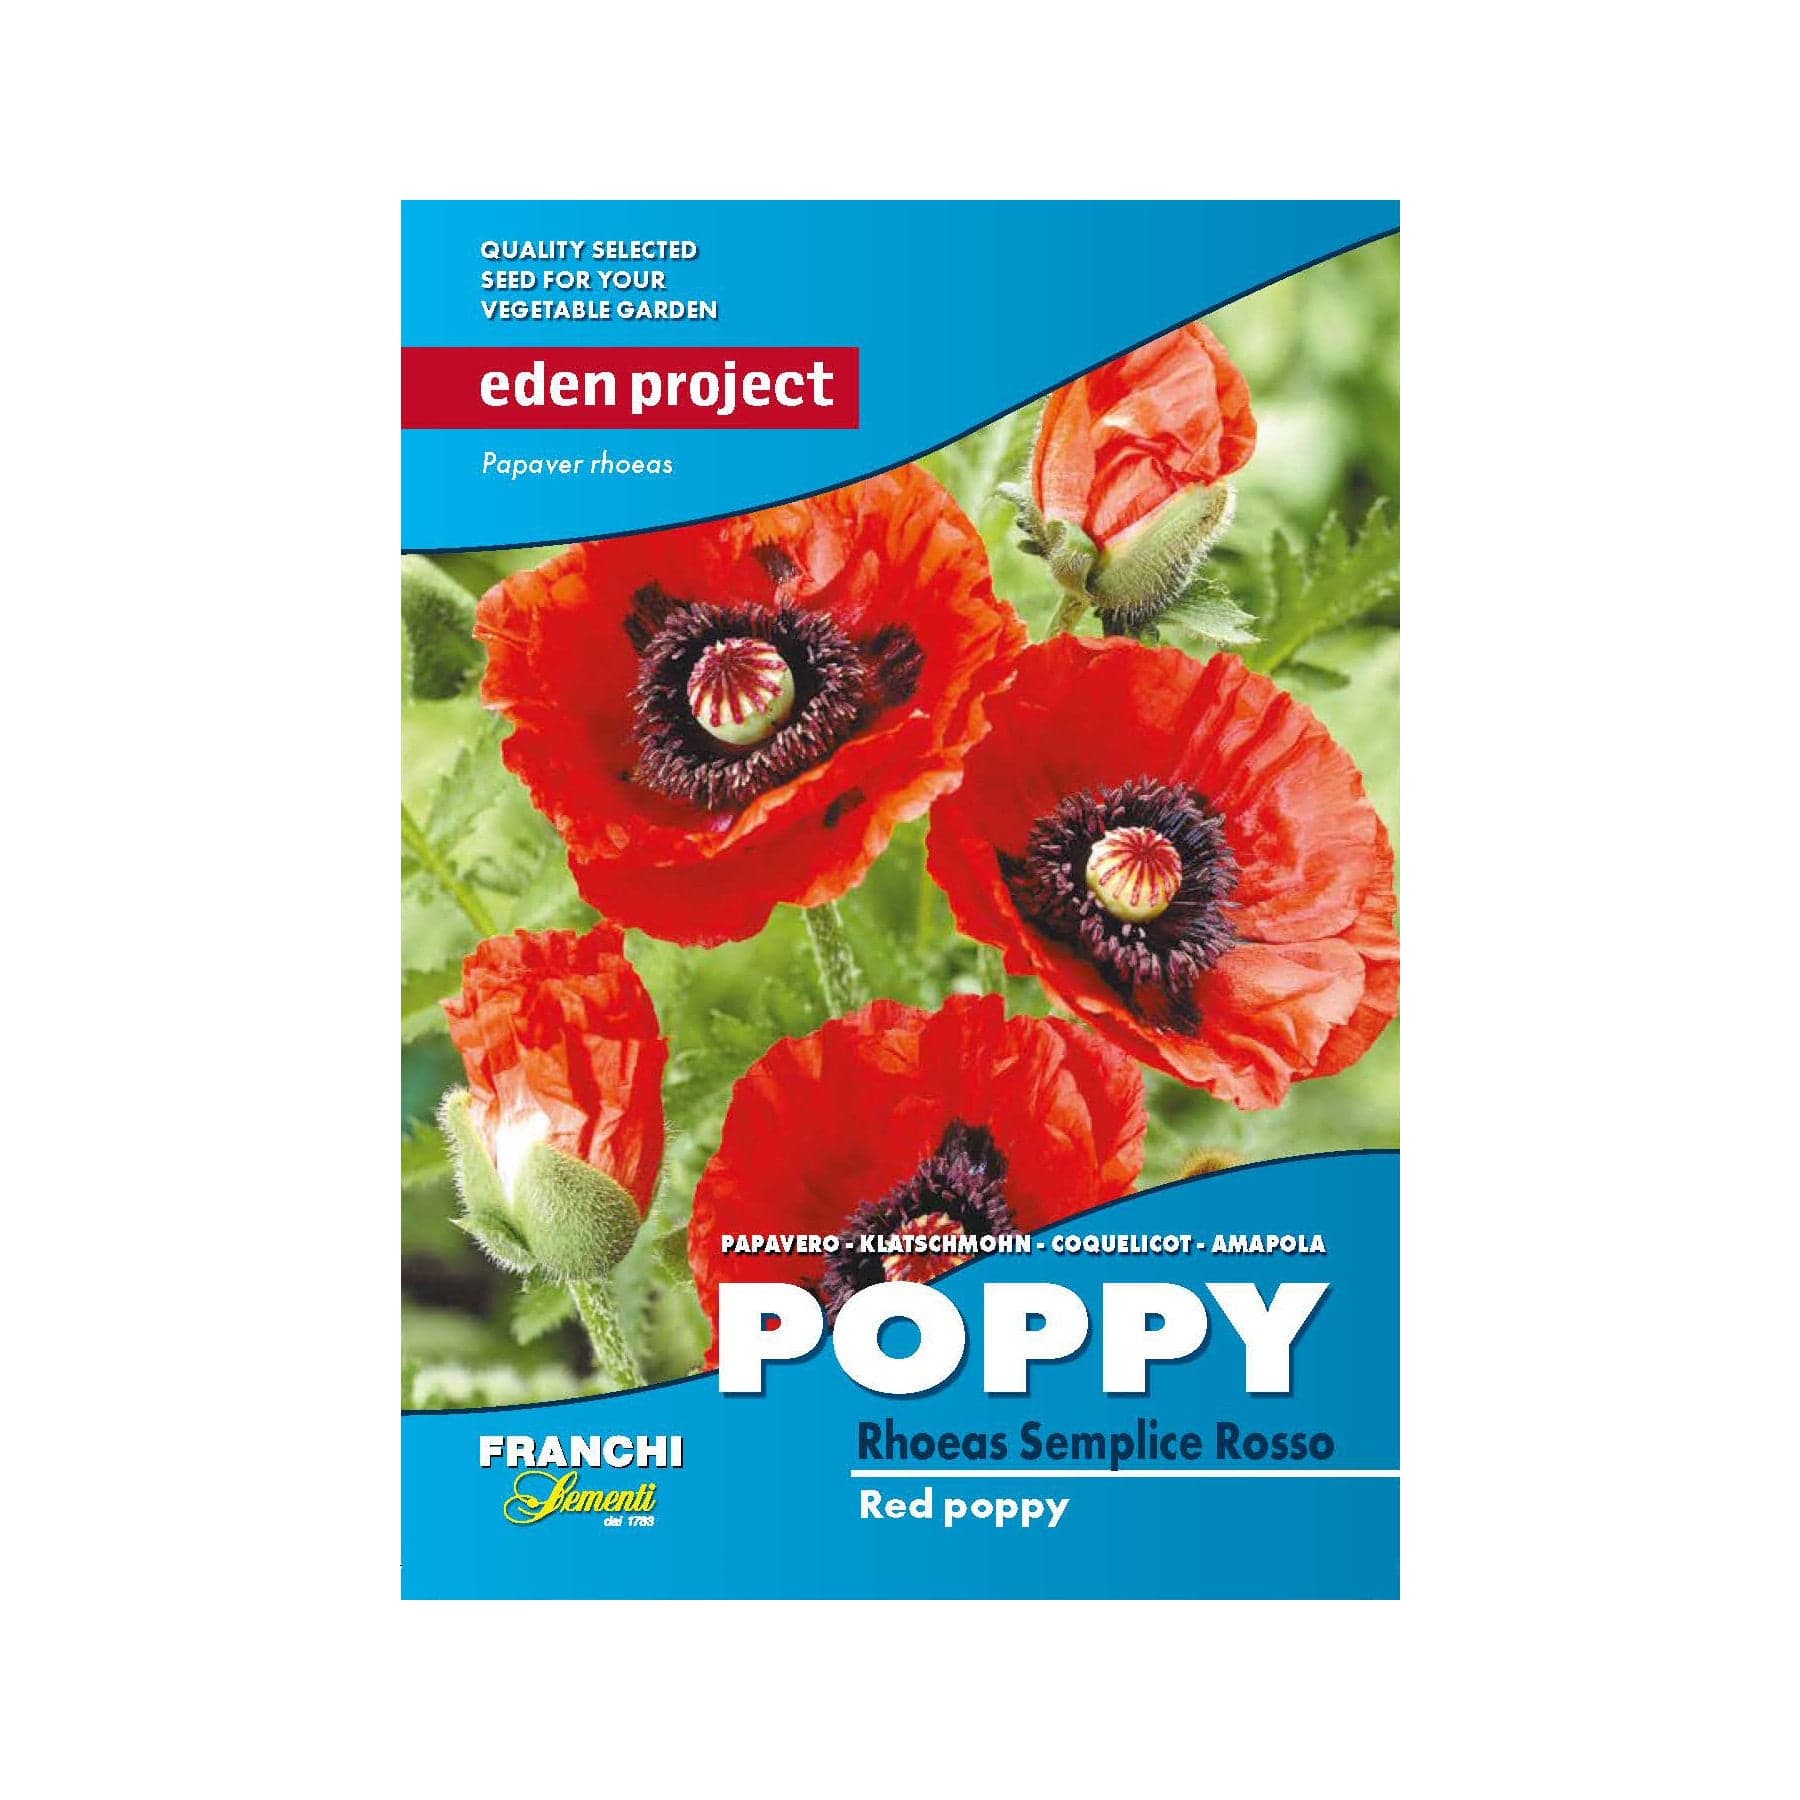 Red poppy seeds